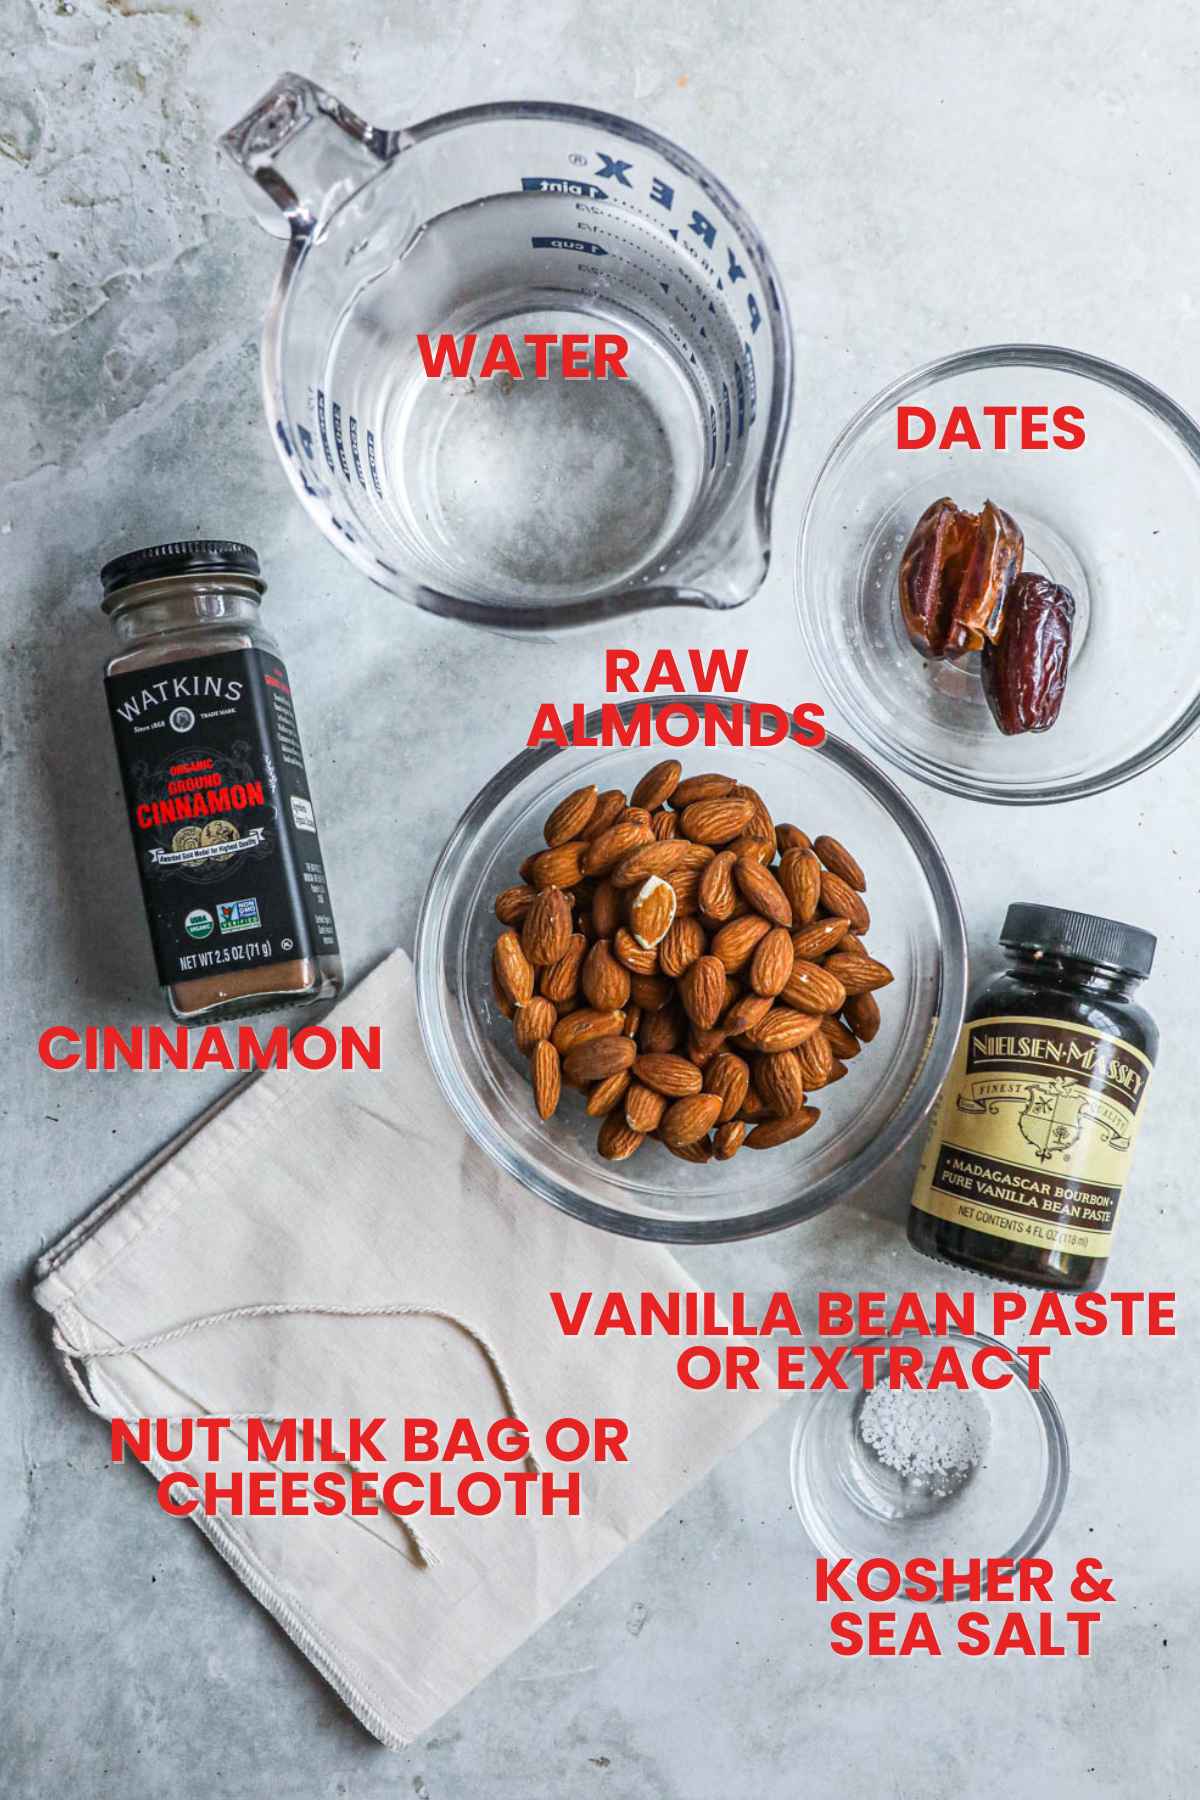 Ingredients to make spiced Vitamix almond milk, raw almonds, cinnamon, dates, water, vanilla bean paste or extract, salt, nut milk bag.